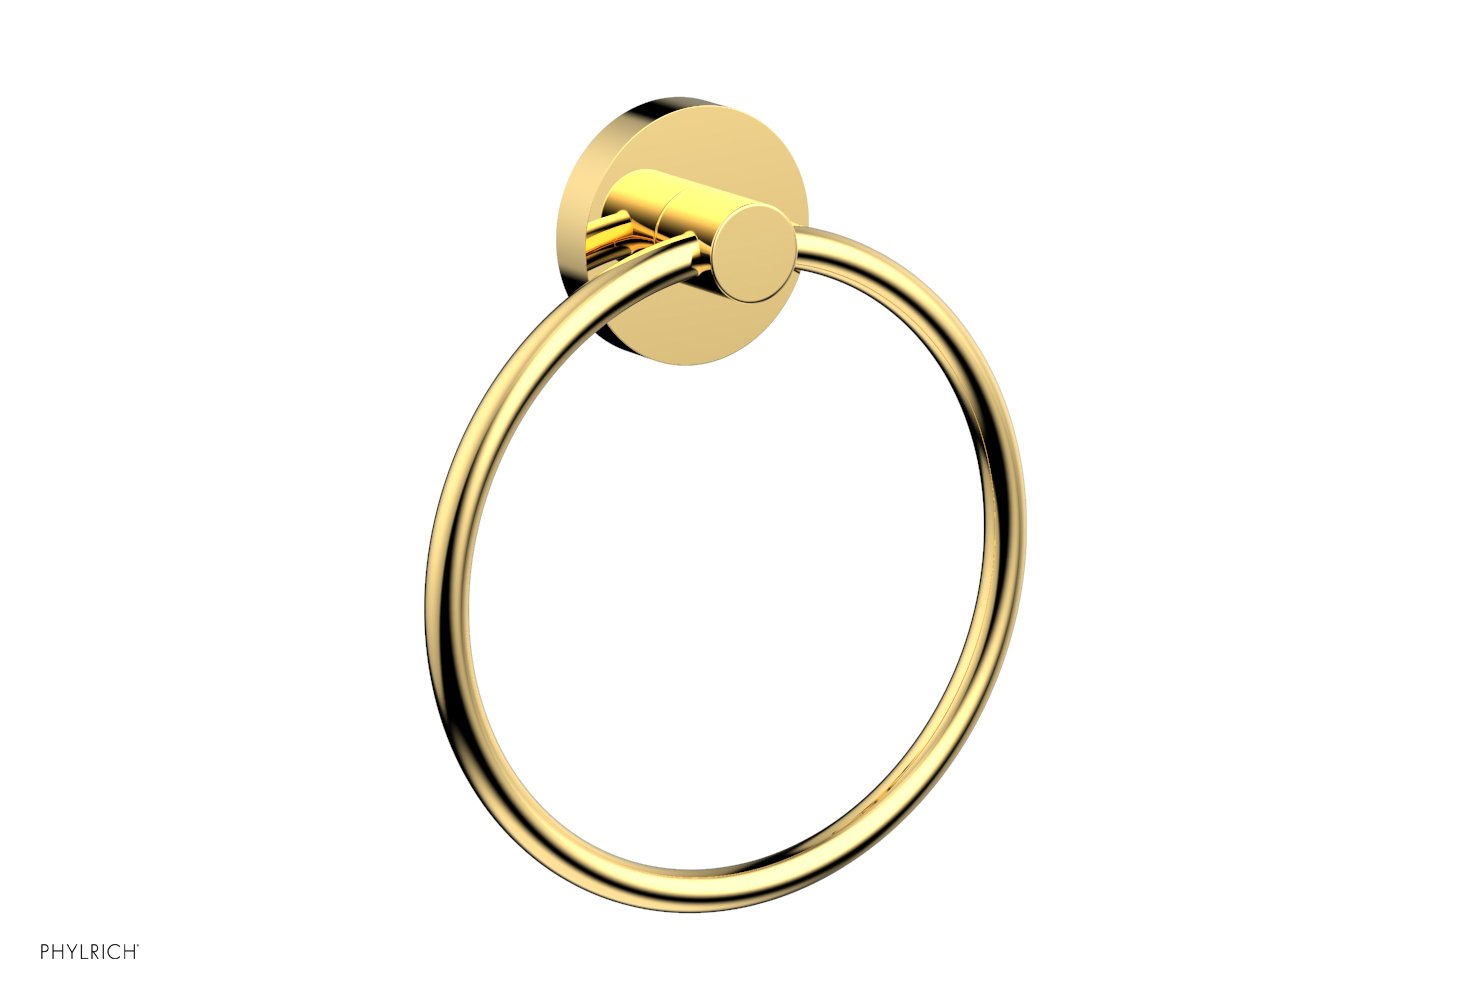 BASICQ B3731  Towel ring Chromed brass towel ring By Colombo Design